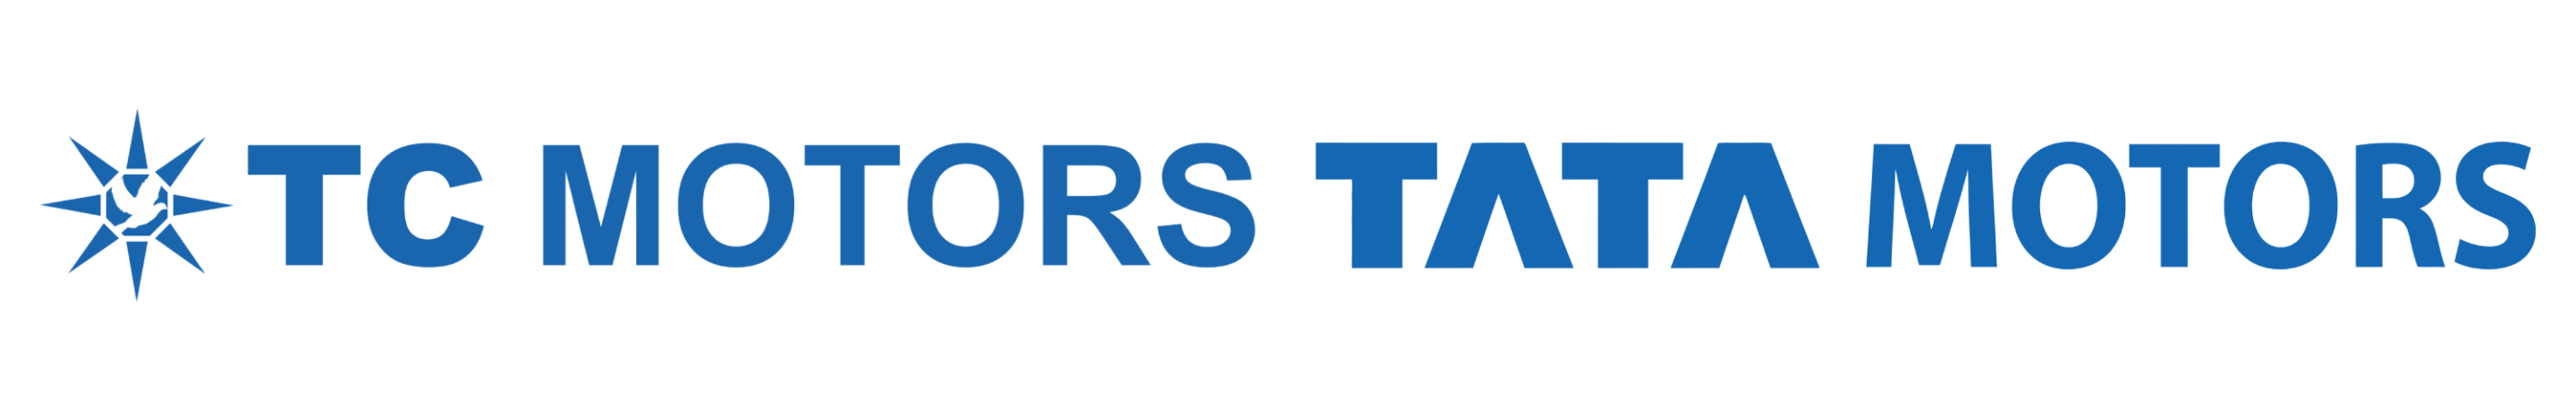 Tata Motors Logo Transparent Image